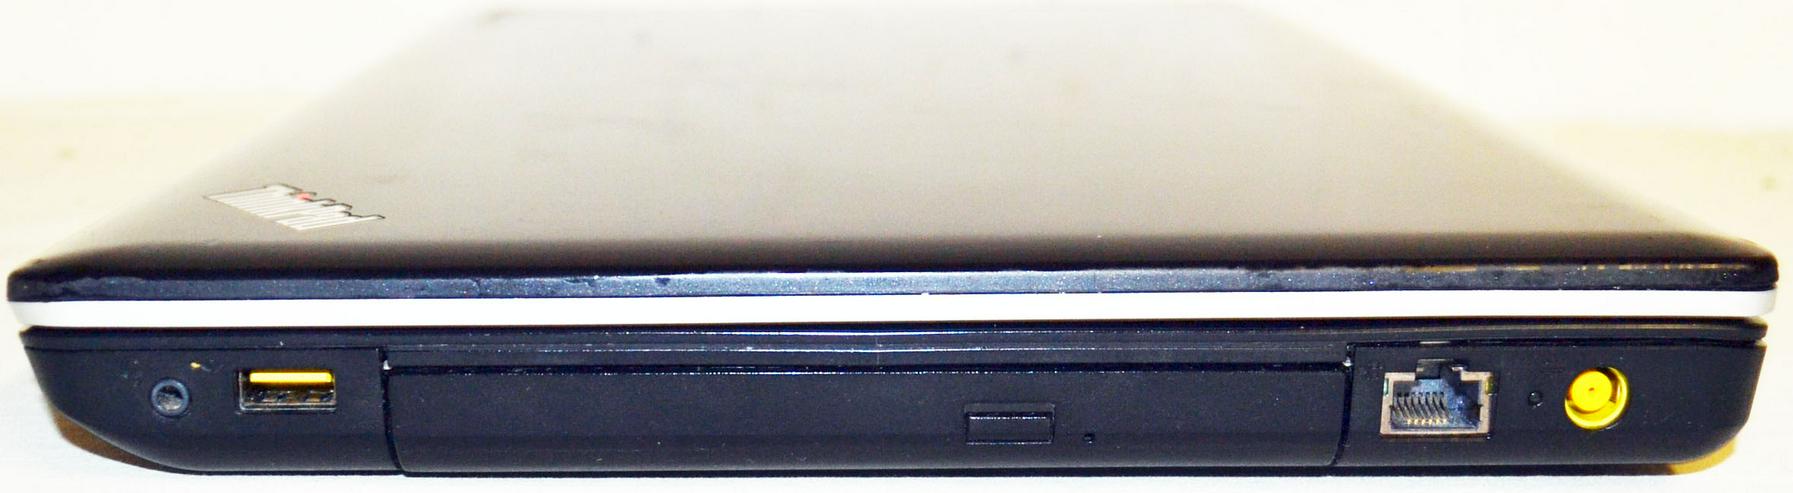 Lenovo ThinkPad E535 15,6" AMD-A8 Quadcore 8GB RAM 128 SSD DVD - Notebooks & Netbooks - Bild 6